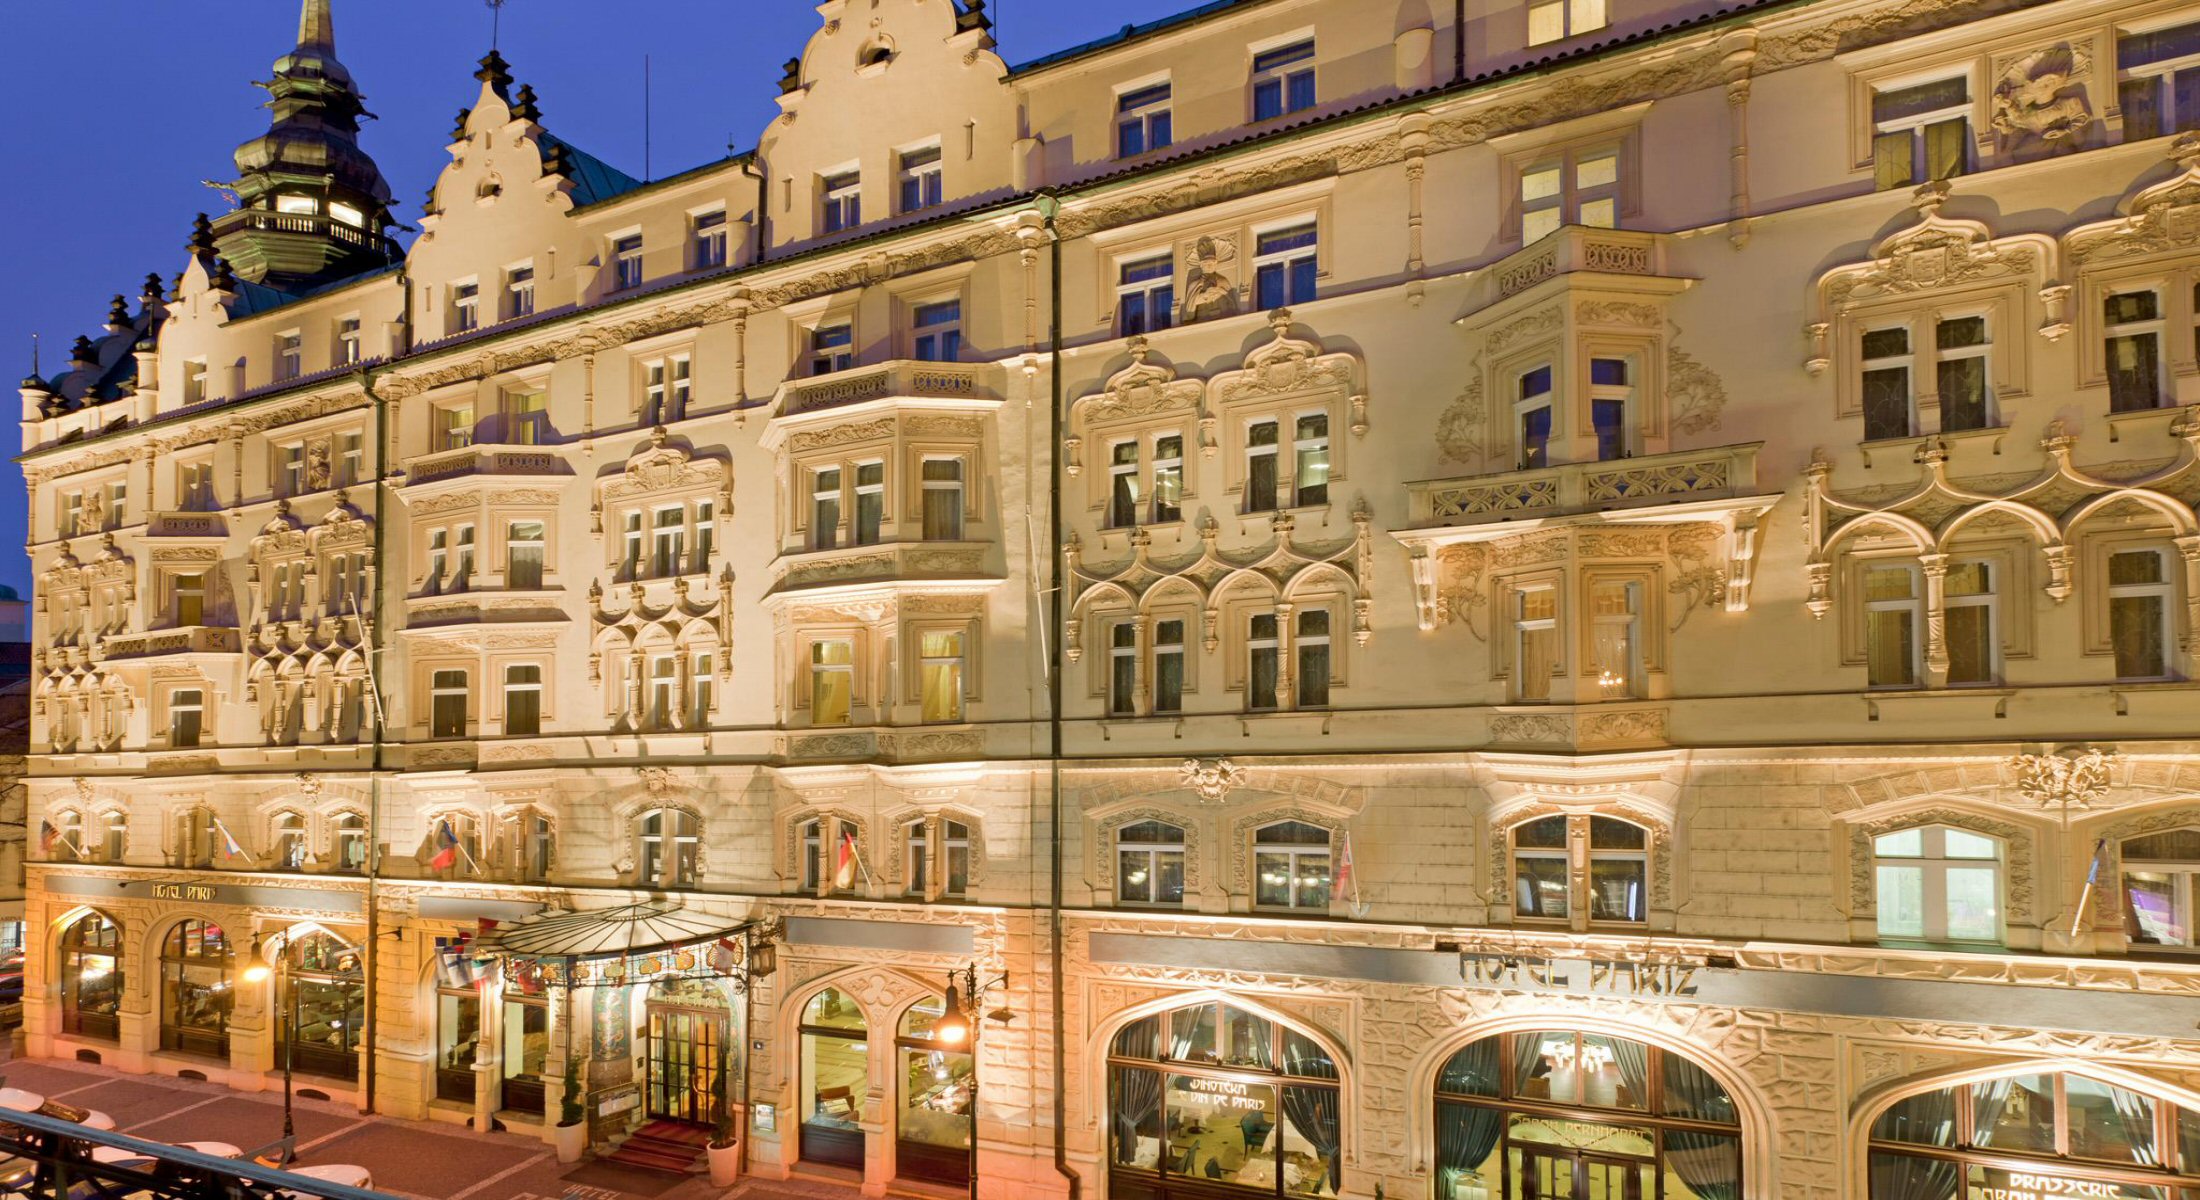 Hotelu Paříž Praha 1